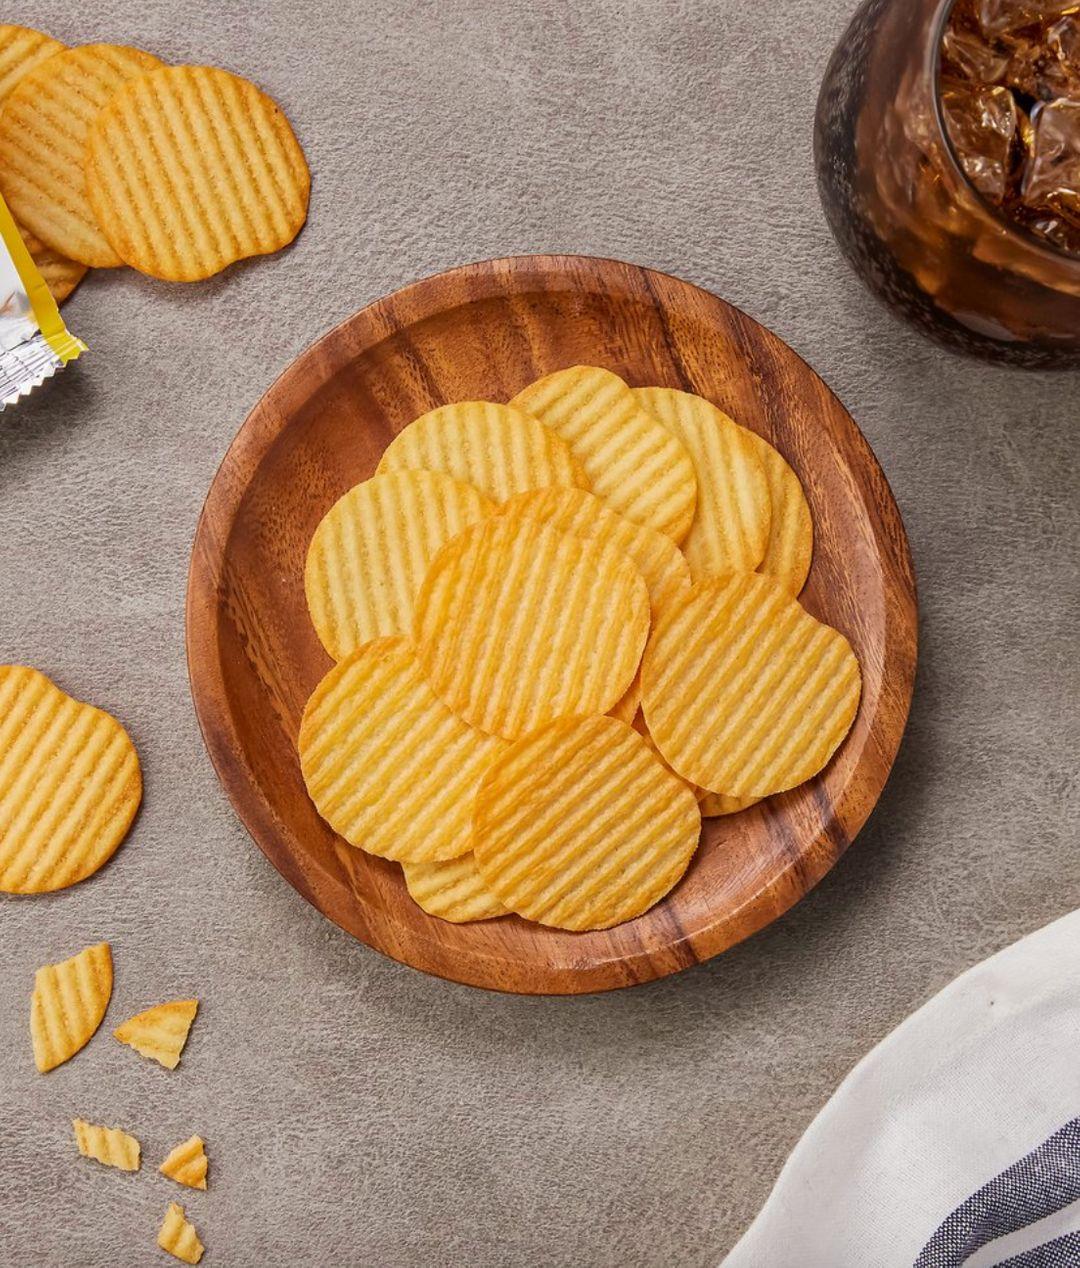 korean brand orion's yegam original flavor chips in a wooden bowl